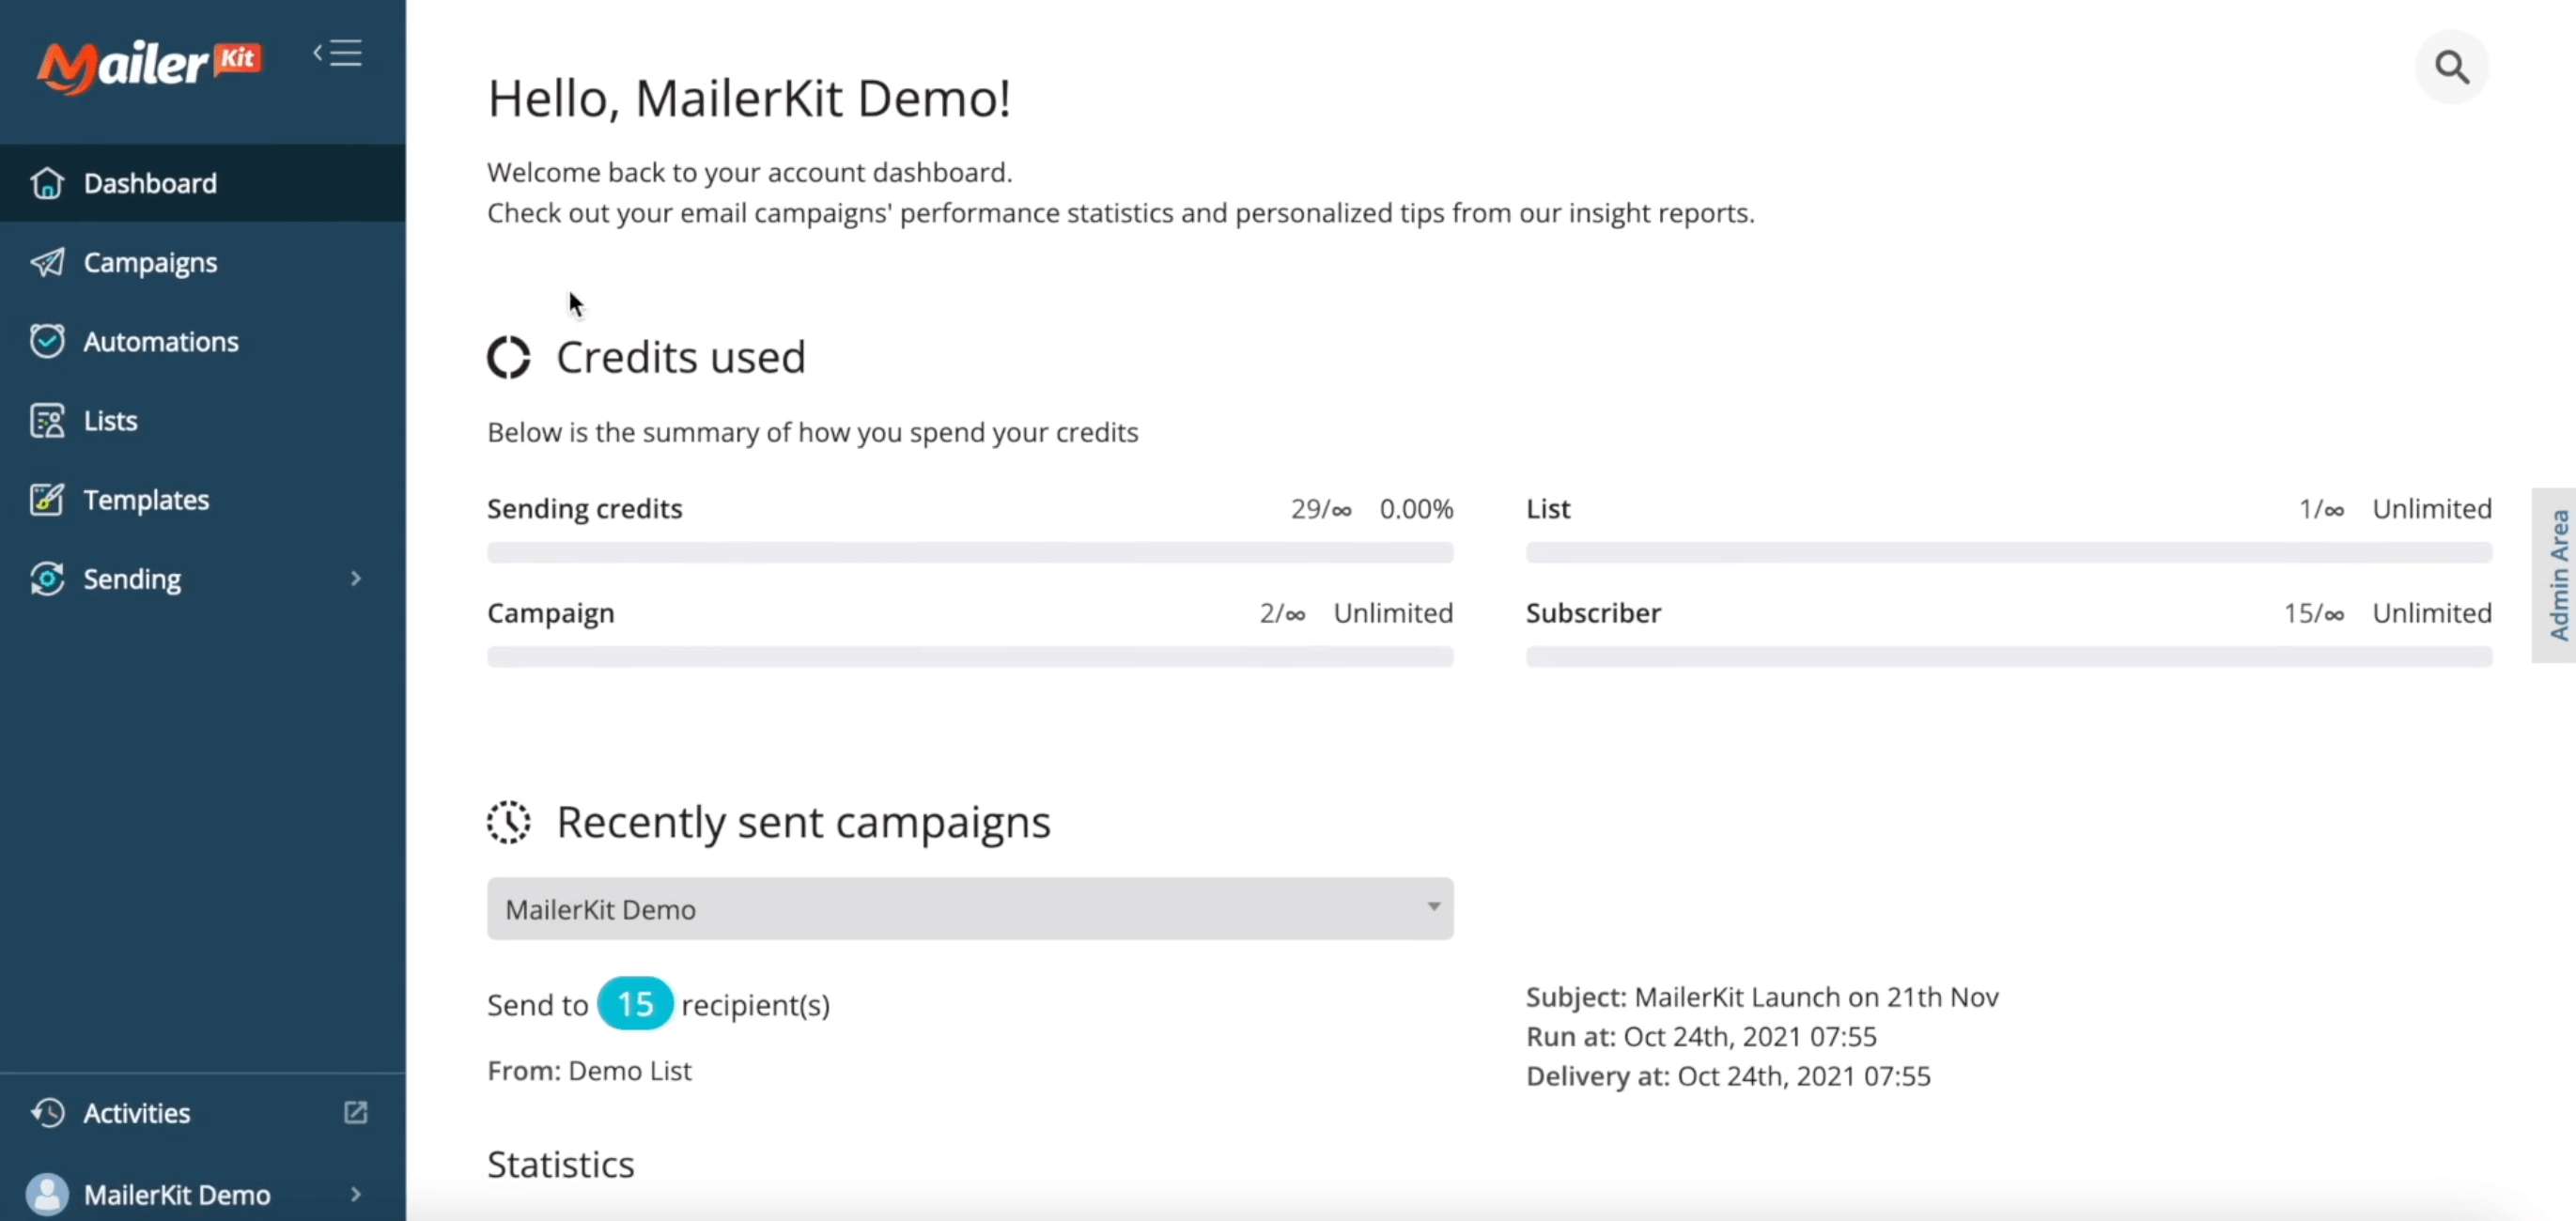 MailerKit Review: Features & Benefits